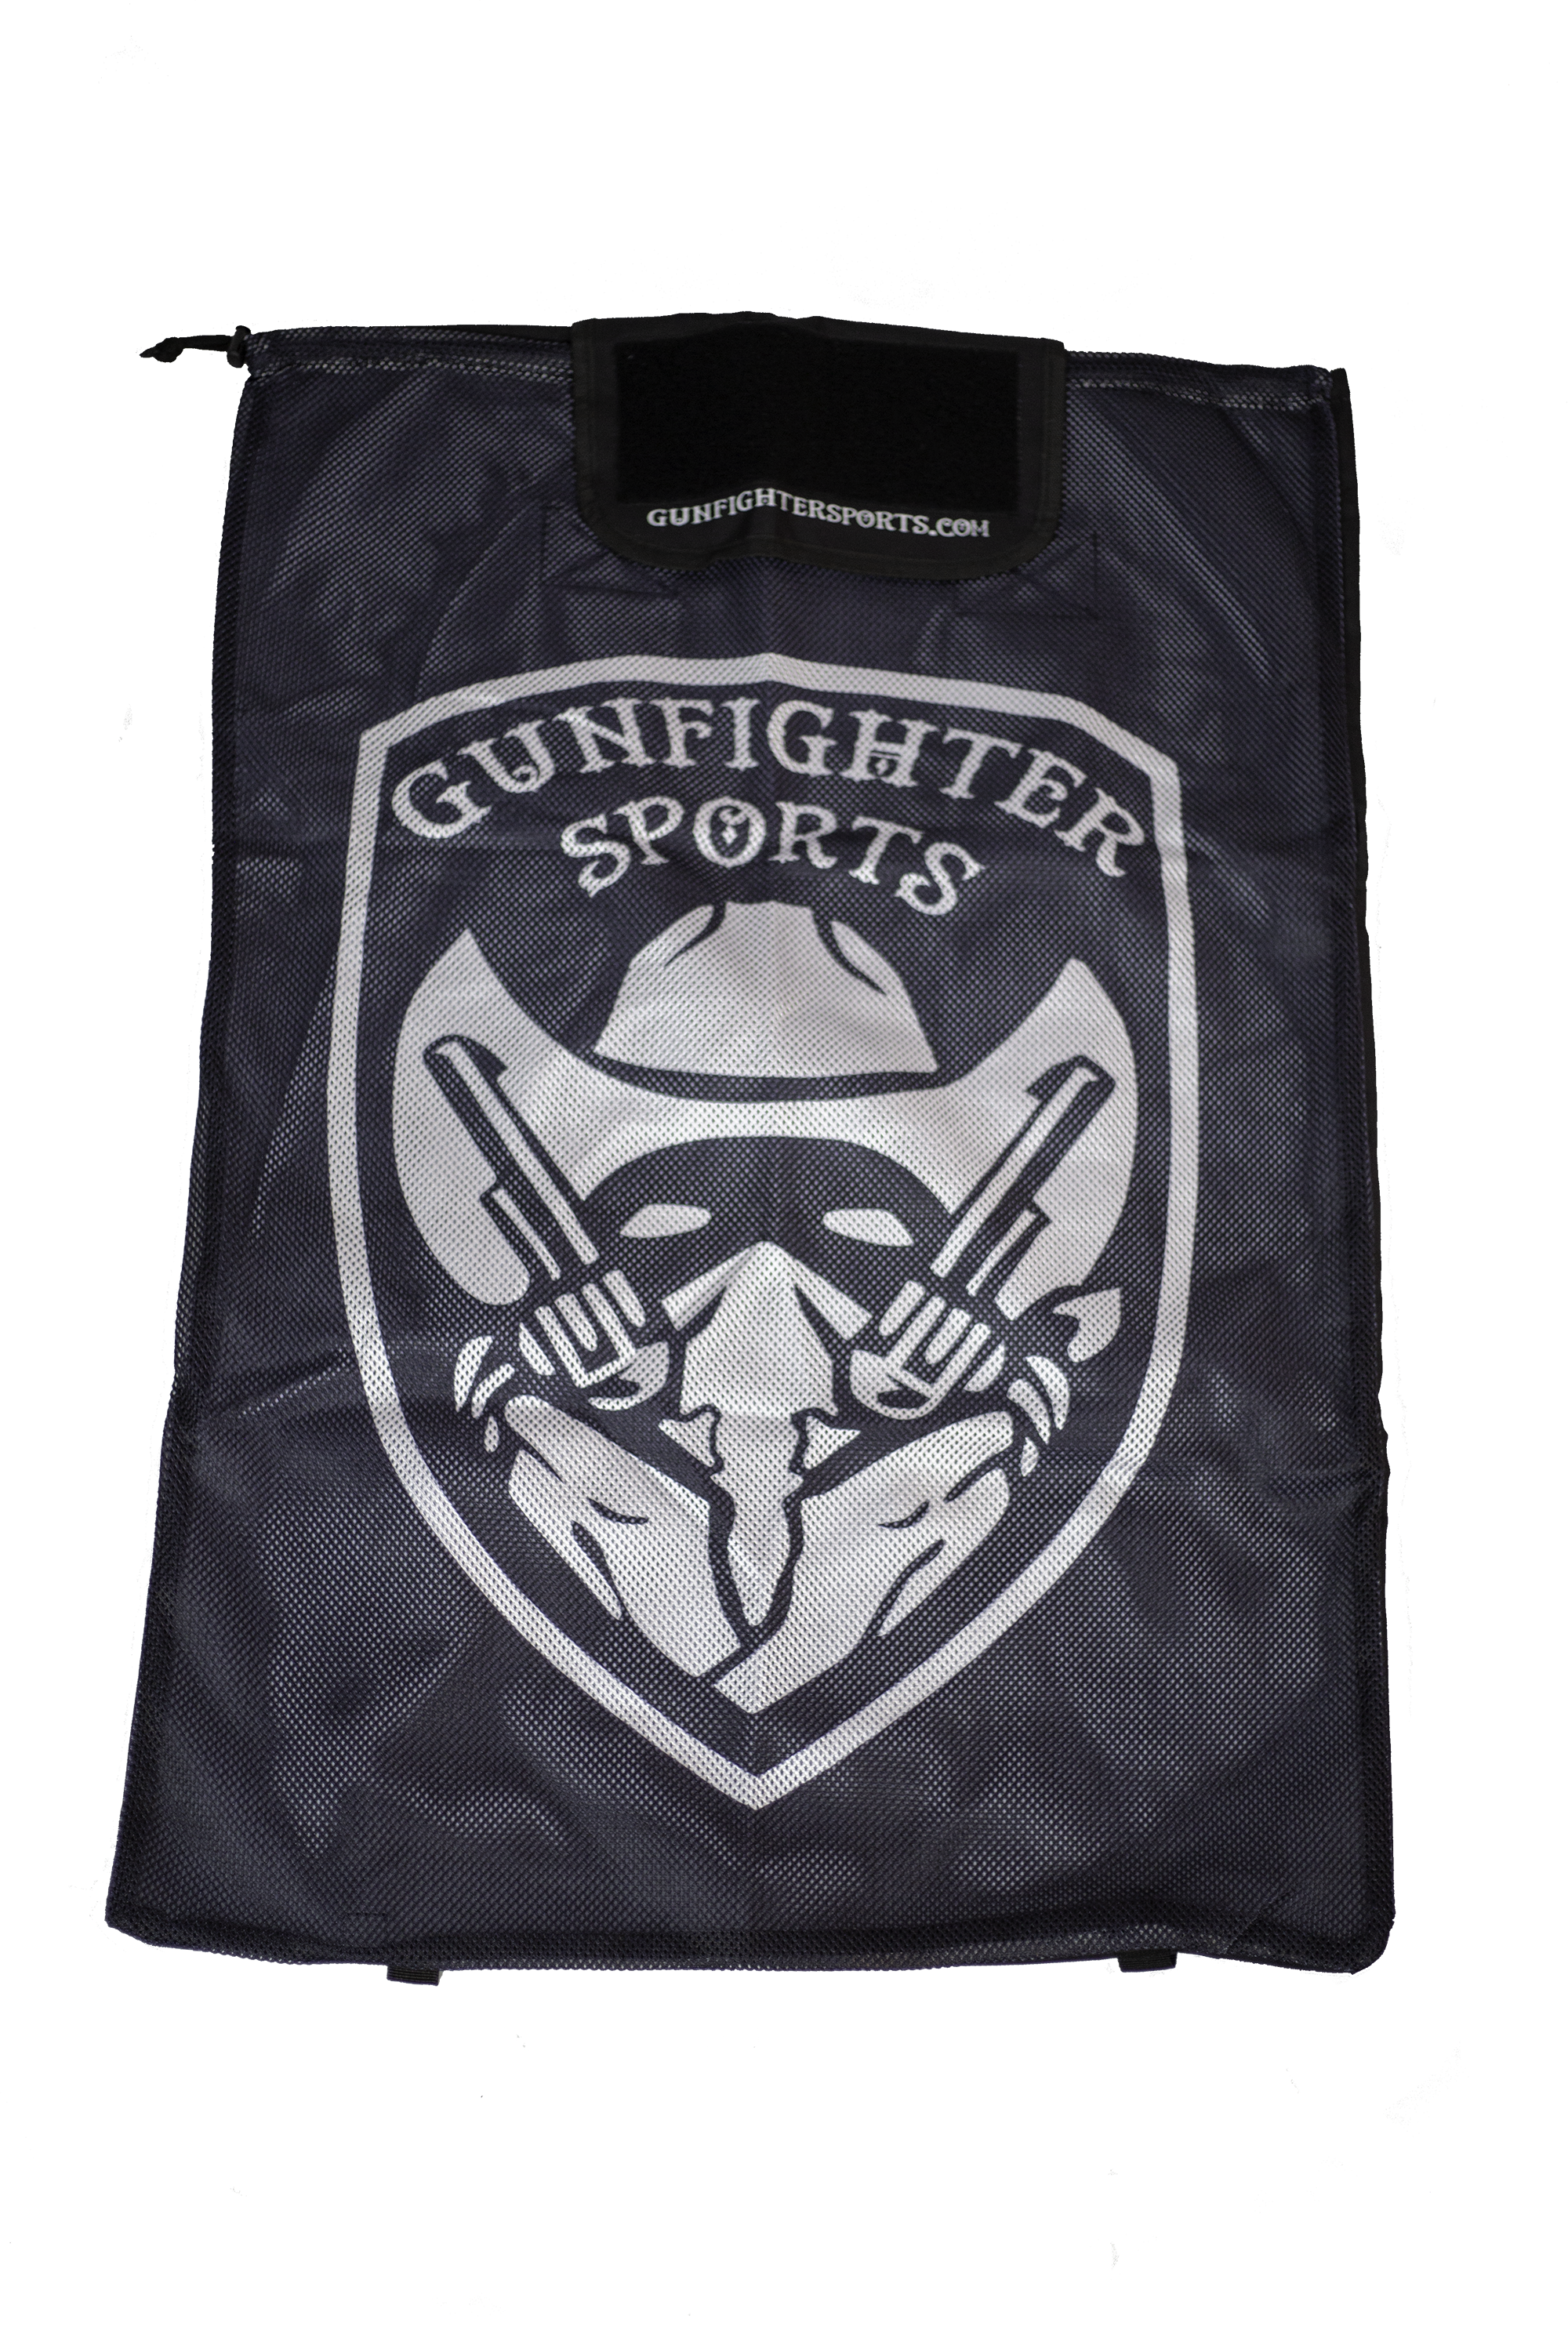 Gunfighter Sports Pod Bag - Black